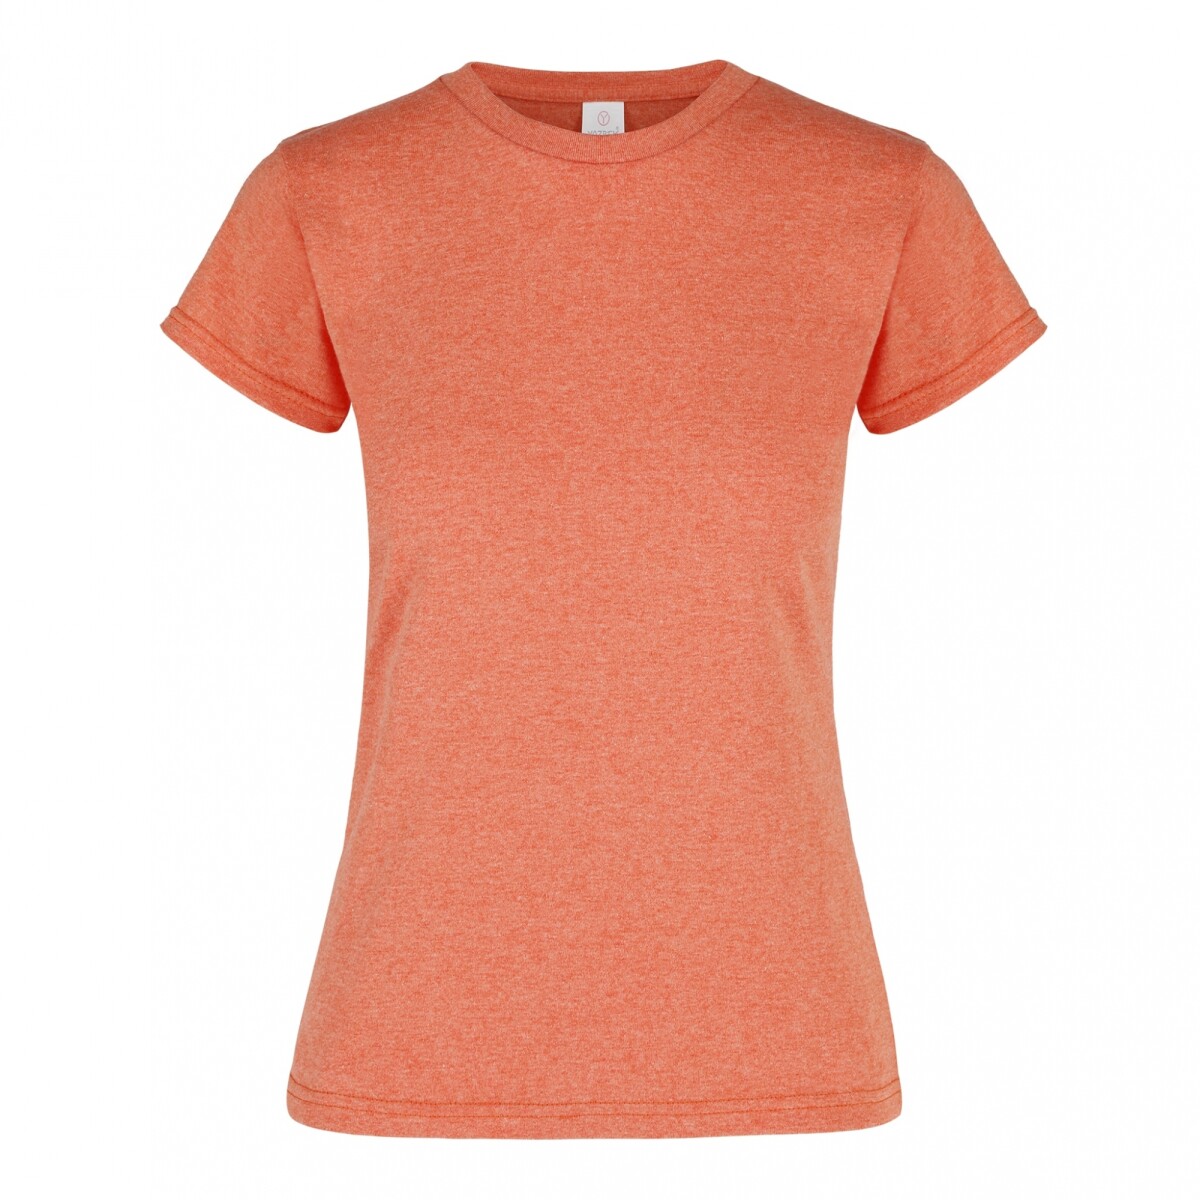 Camiseta jaspe a la base dama - Naranja neón 